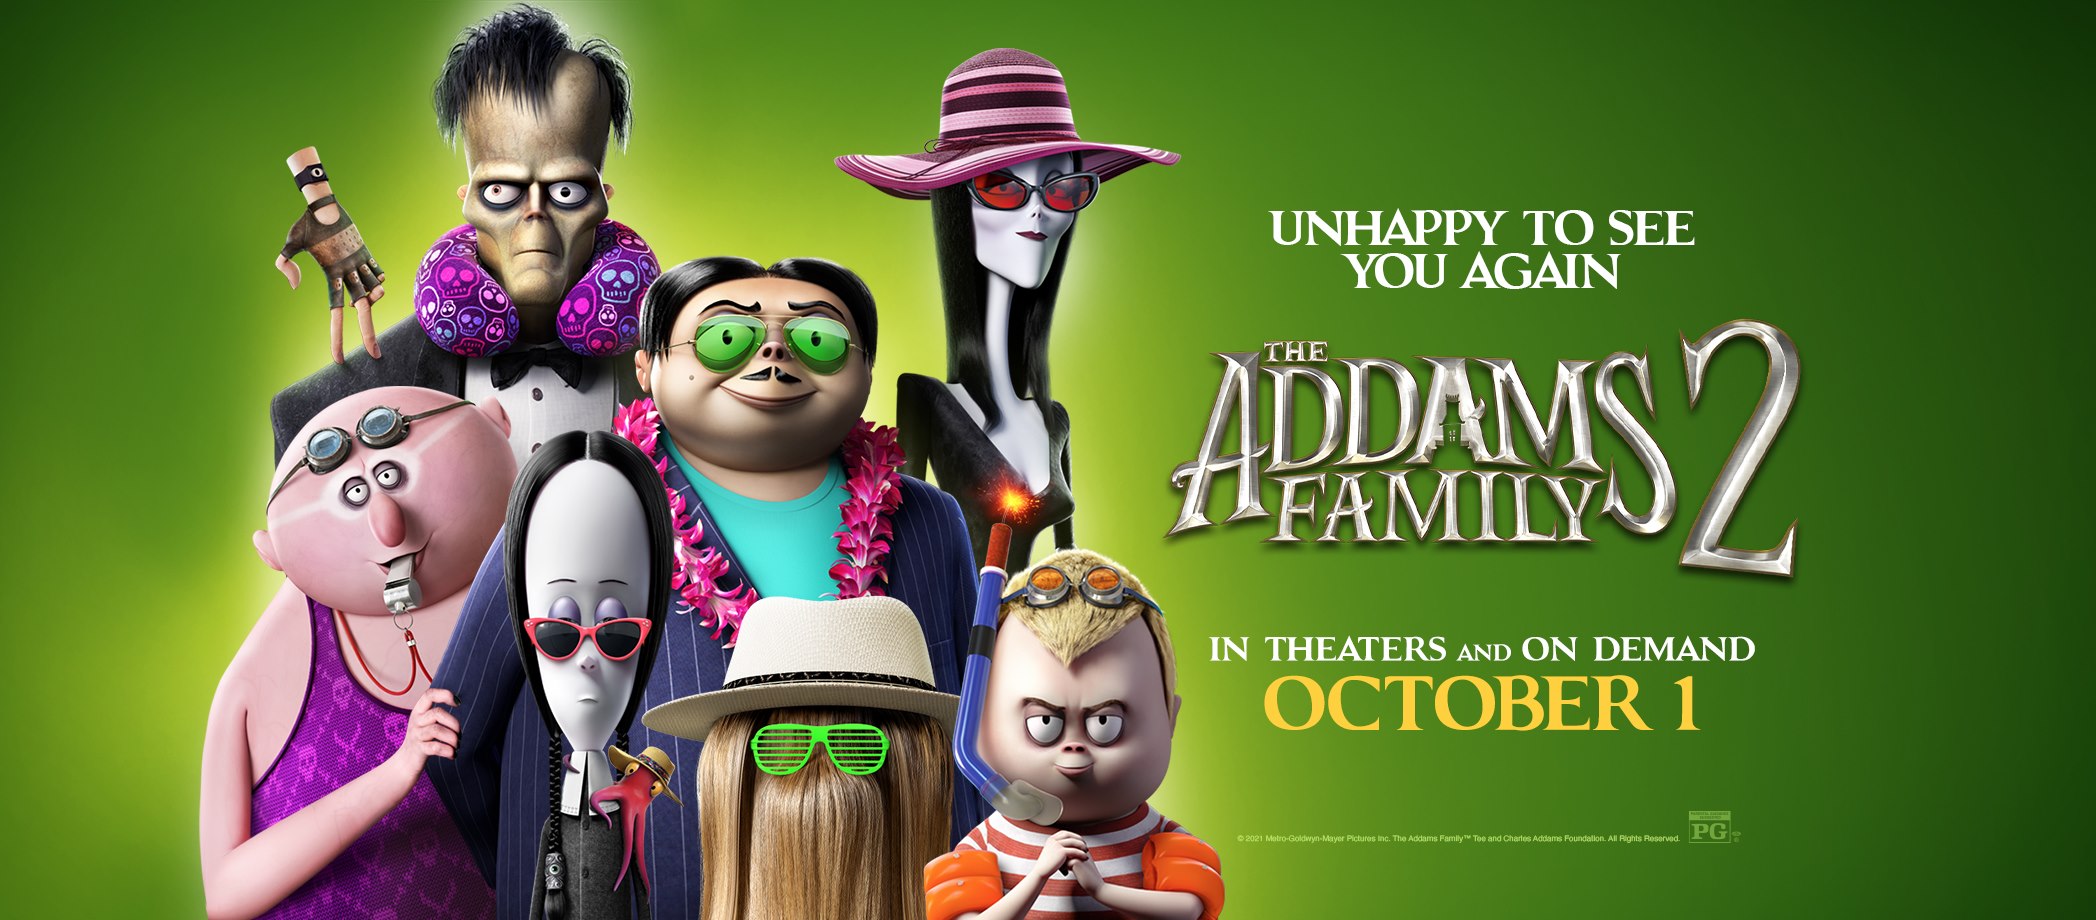 Addams Family 2 animated cover.jpg